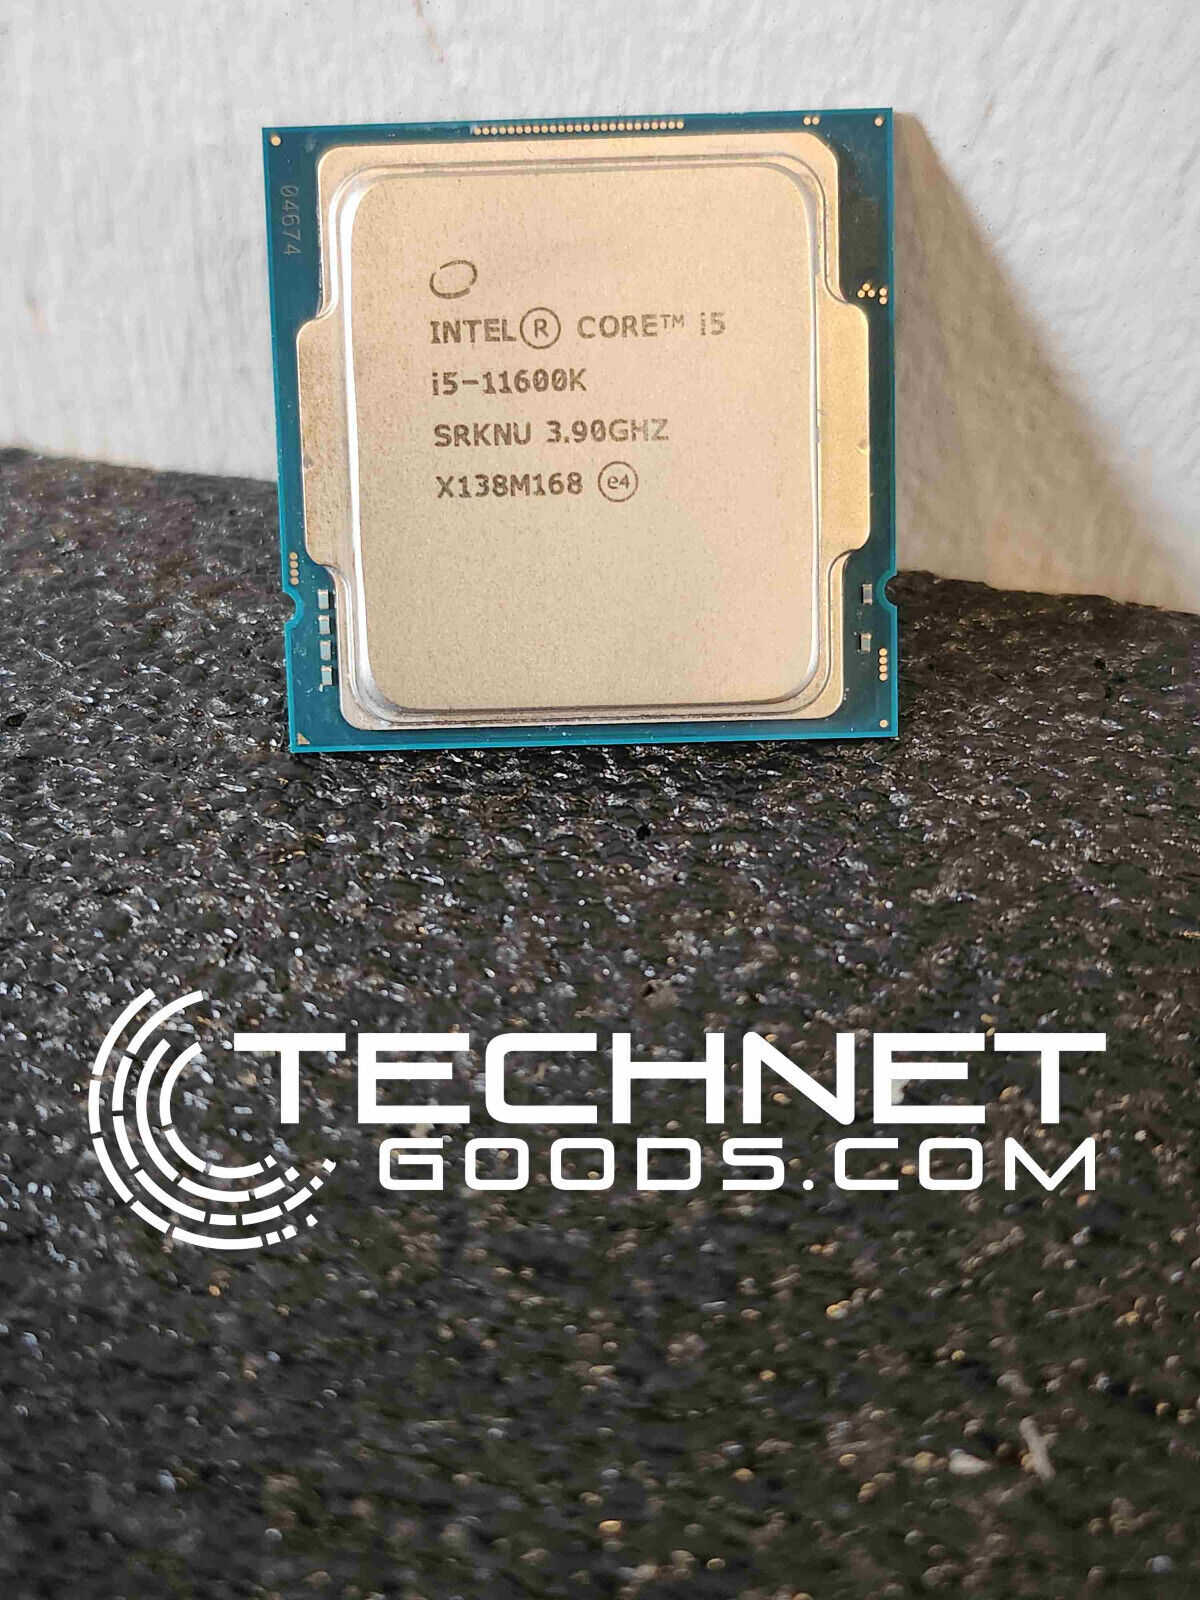 Intel Core i5-11600K 3.9GHz (boost 4.9GHz) LGA 1200 Processor (SRKNU) - TESTED